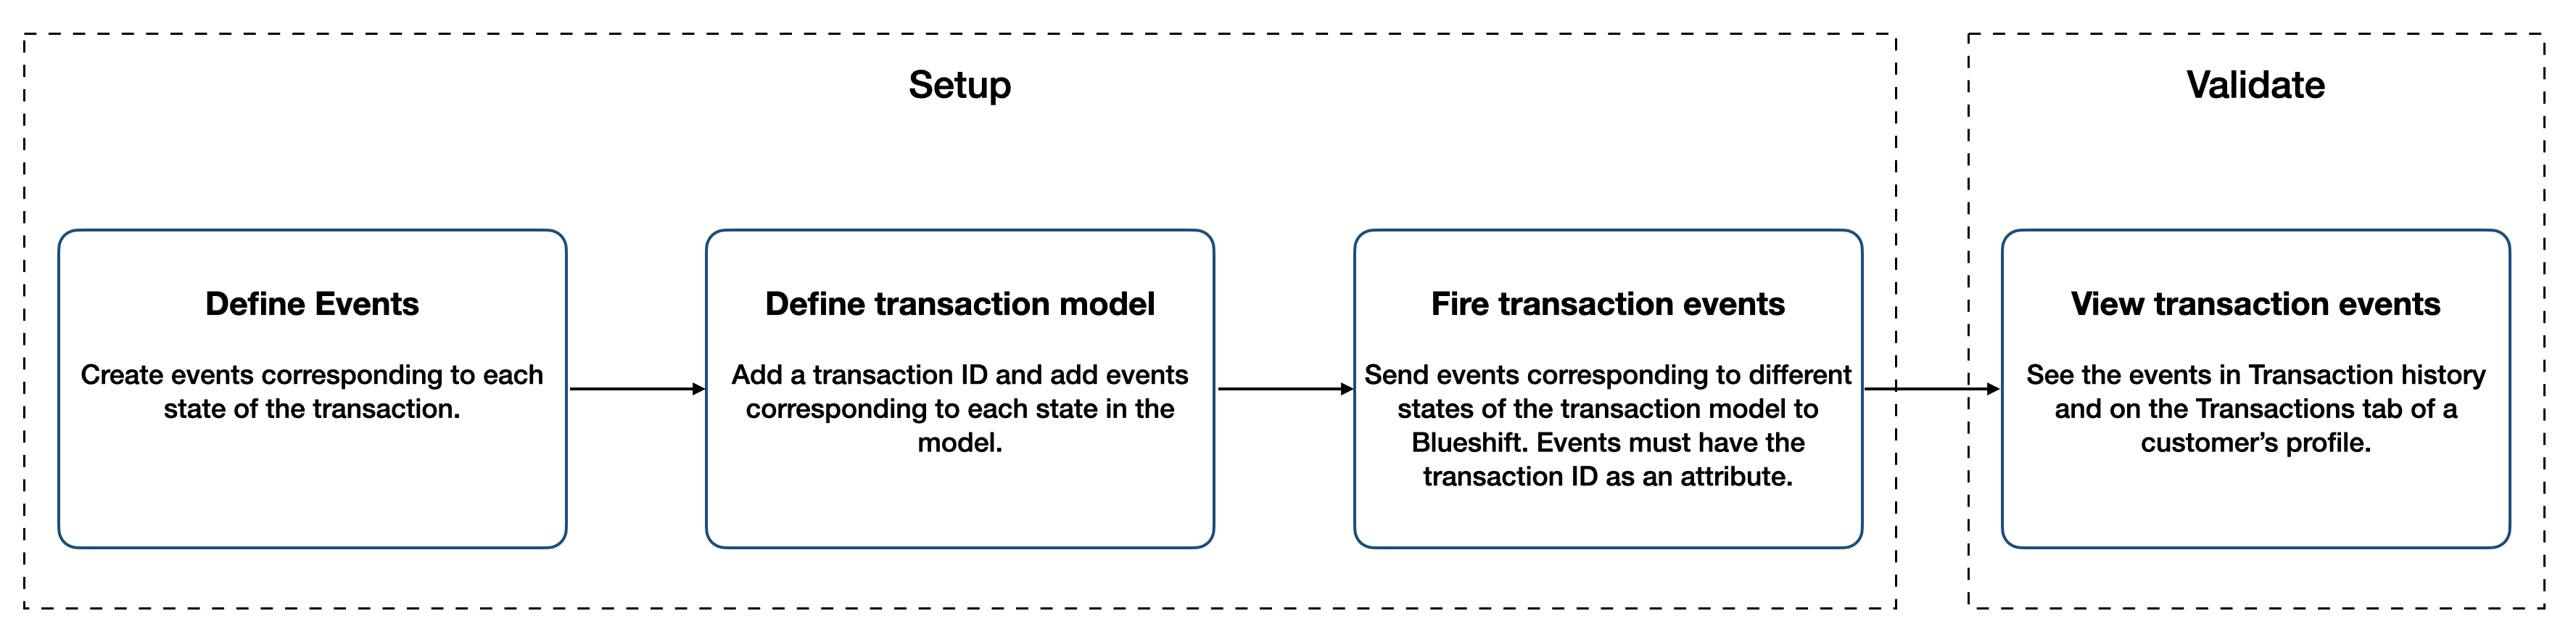 Transactions_flowchart.png